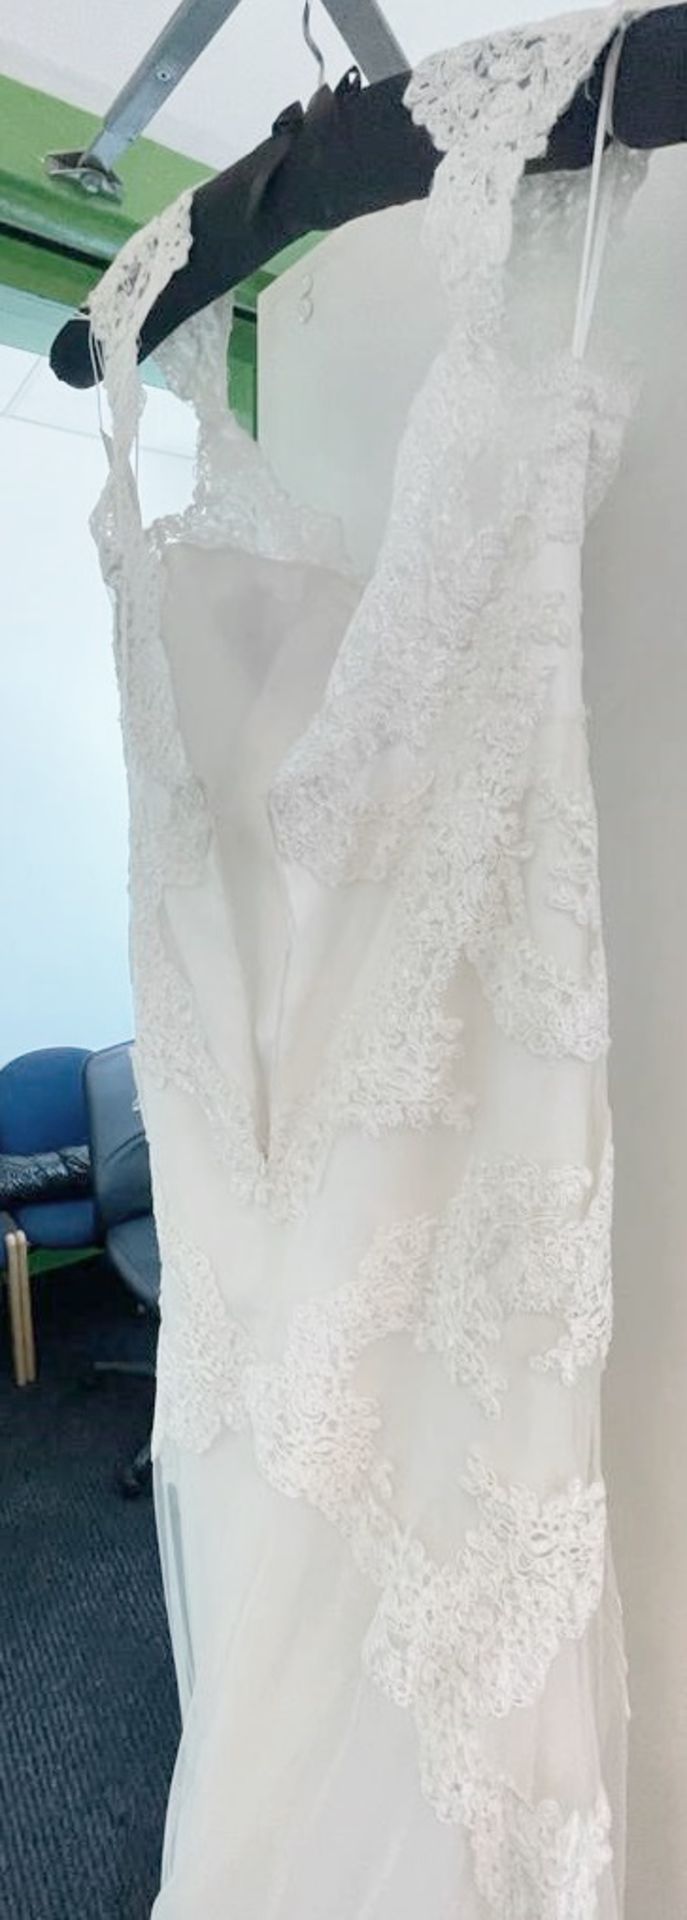 1 x LUSAN MANDONGUS 'Zayna' Designer Wedding Dress Bridal Gown - Size: UK 10 - Original RRP £1,550 - - Image 8 of 13